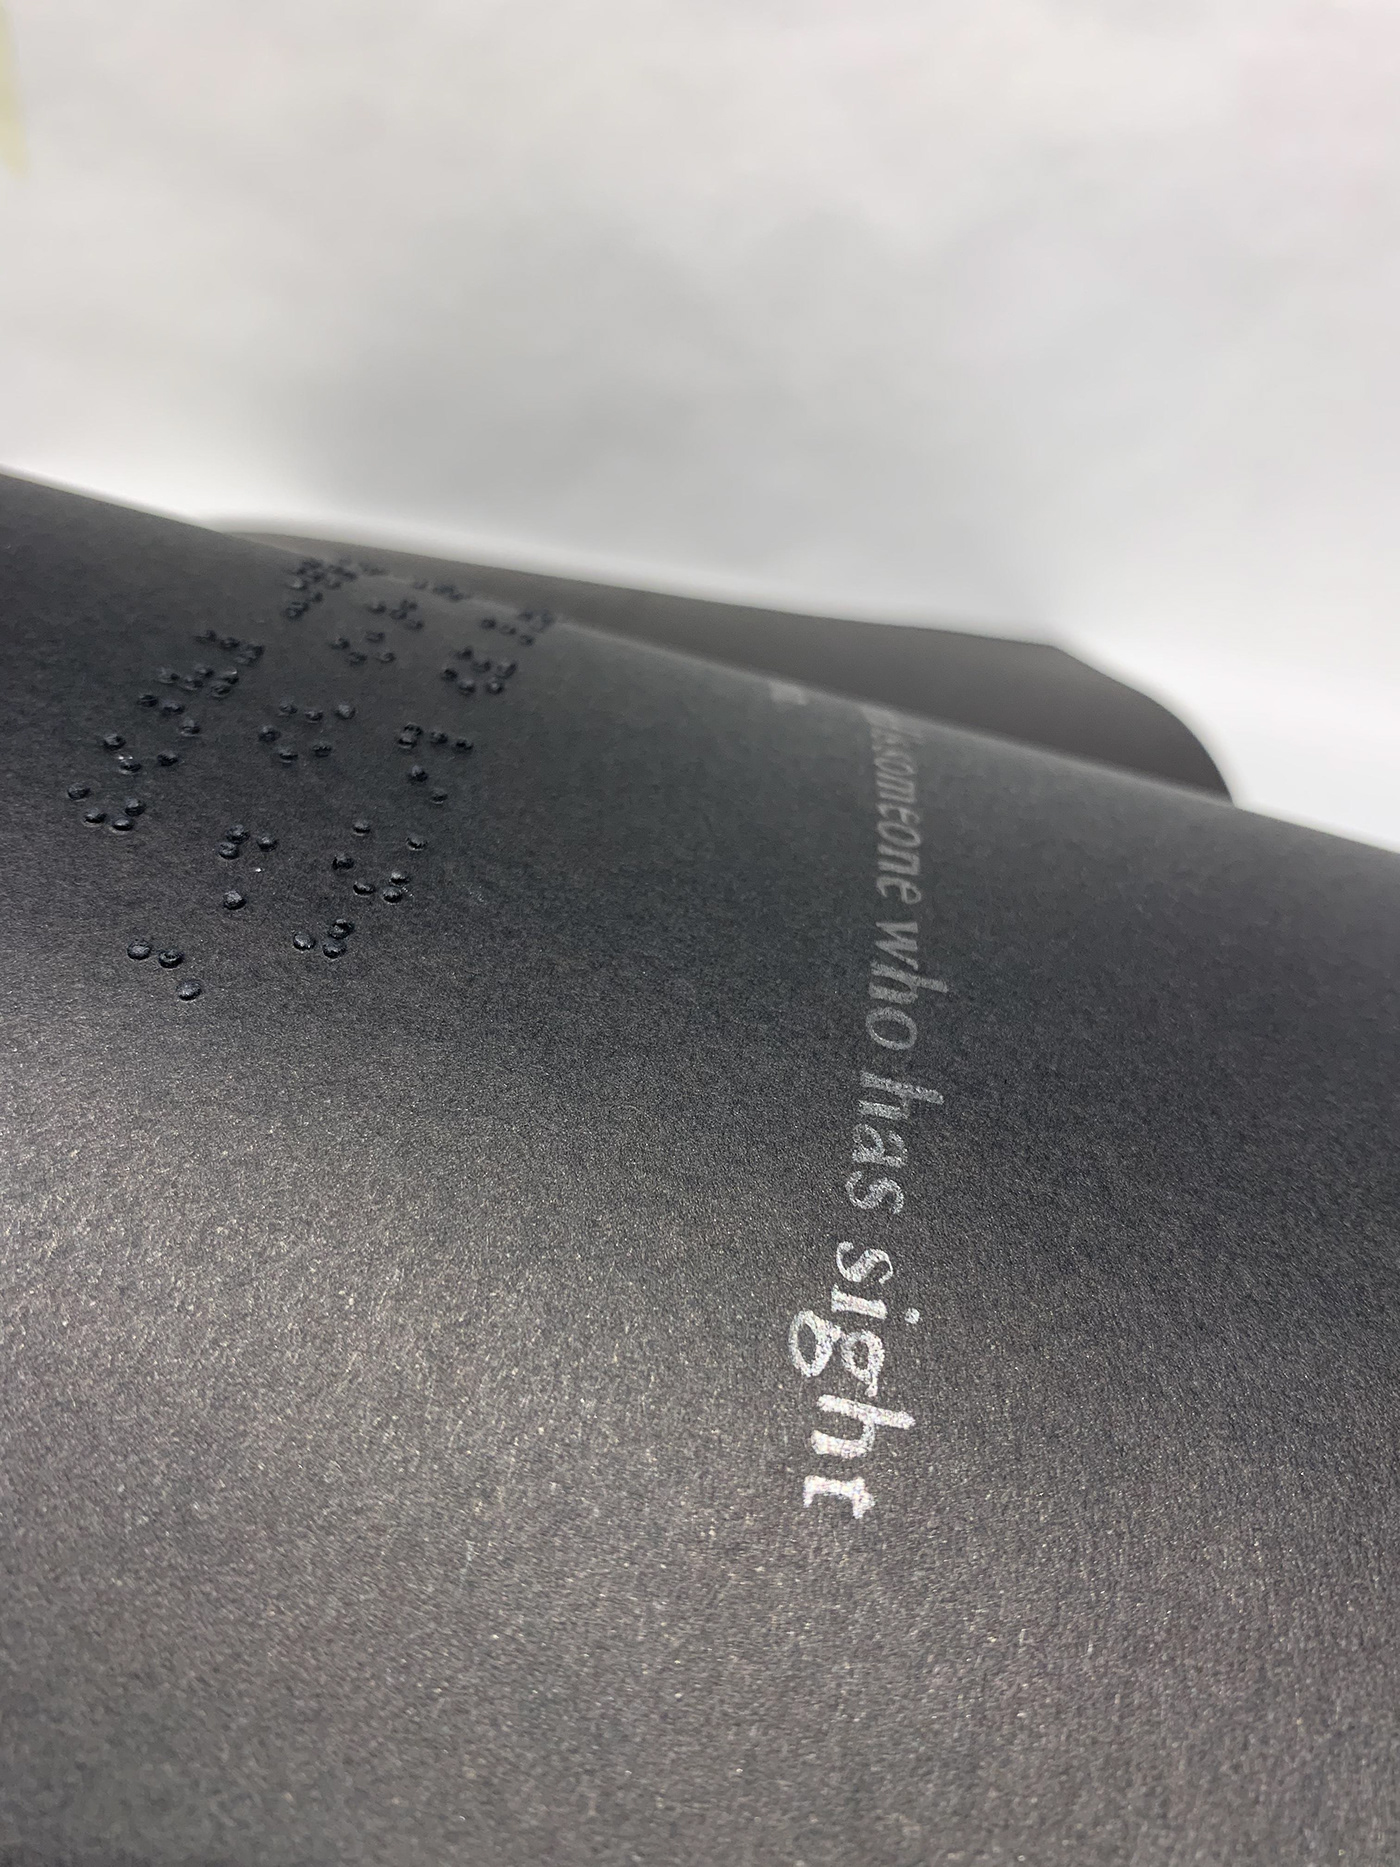 Braille texture Book Binding book design